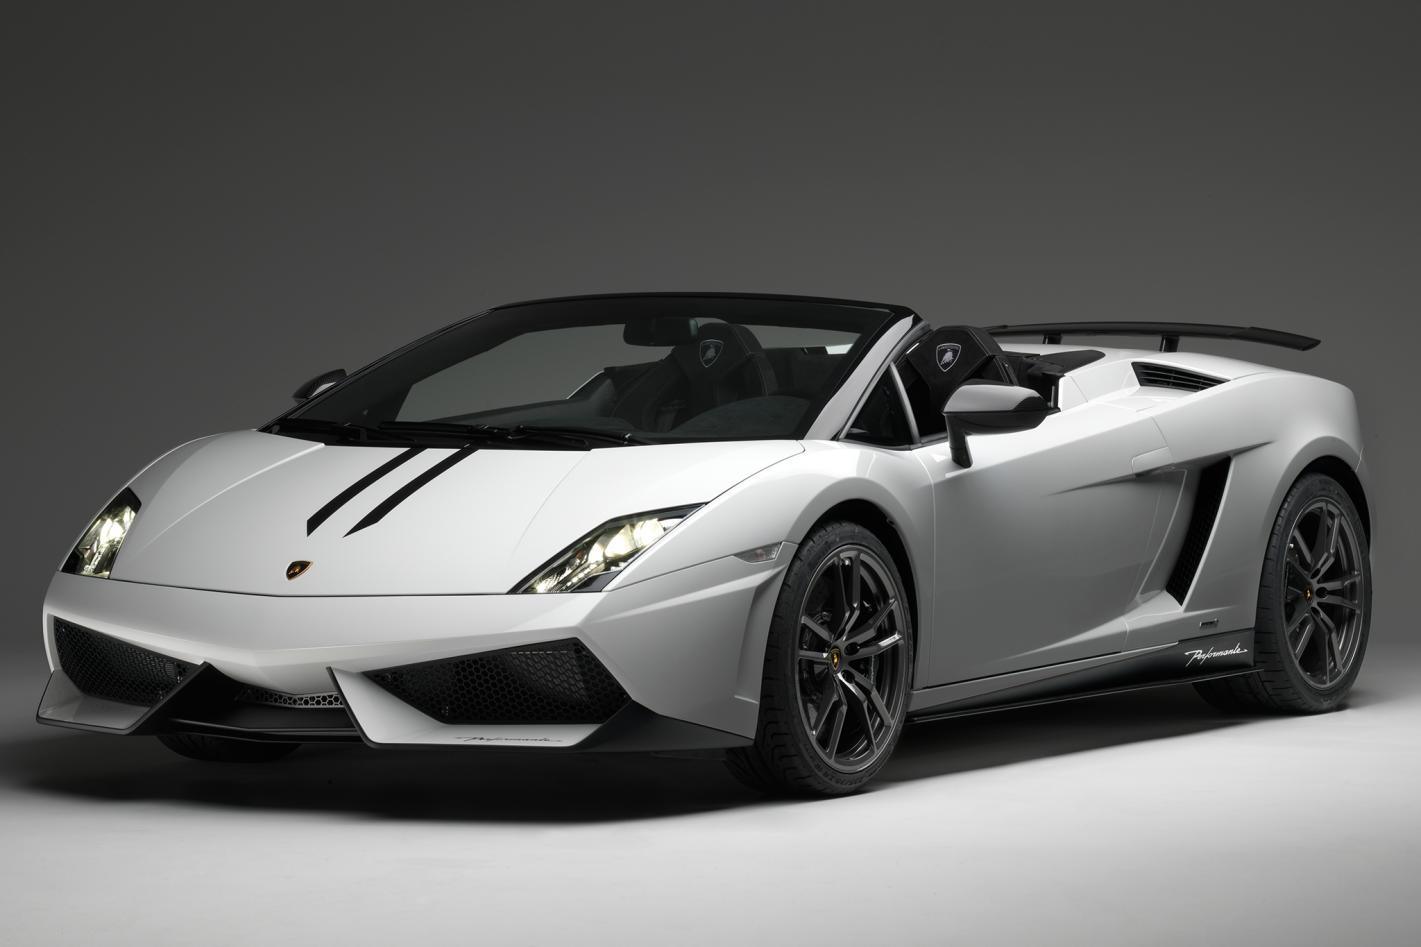 2014-Lamborghini-Gallardo-LP-570-4-Spyder-Performante-front-three-quarters.jpg